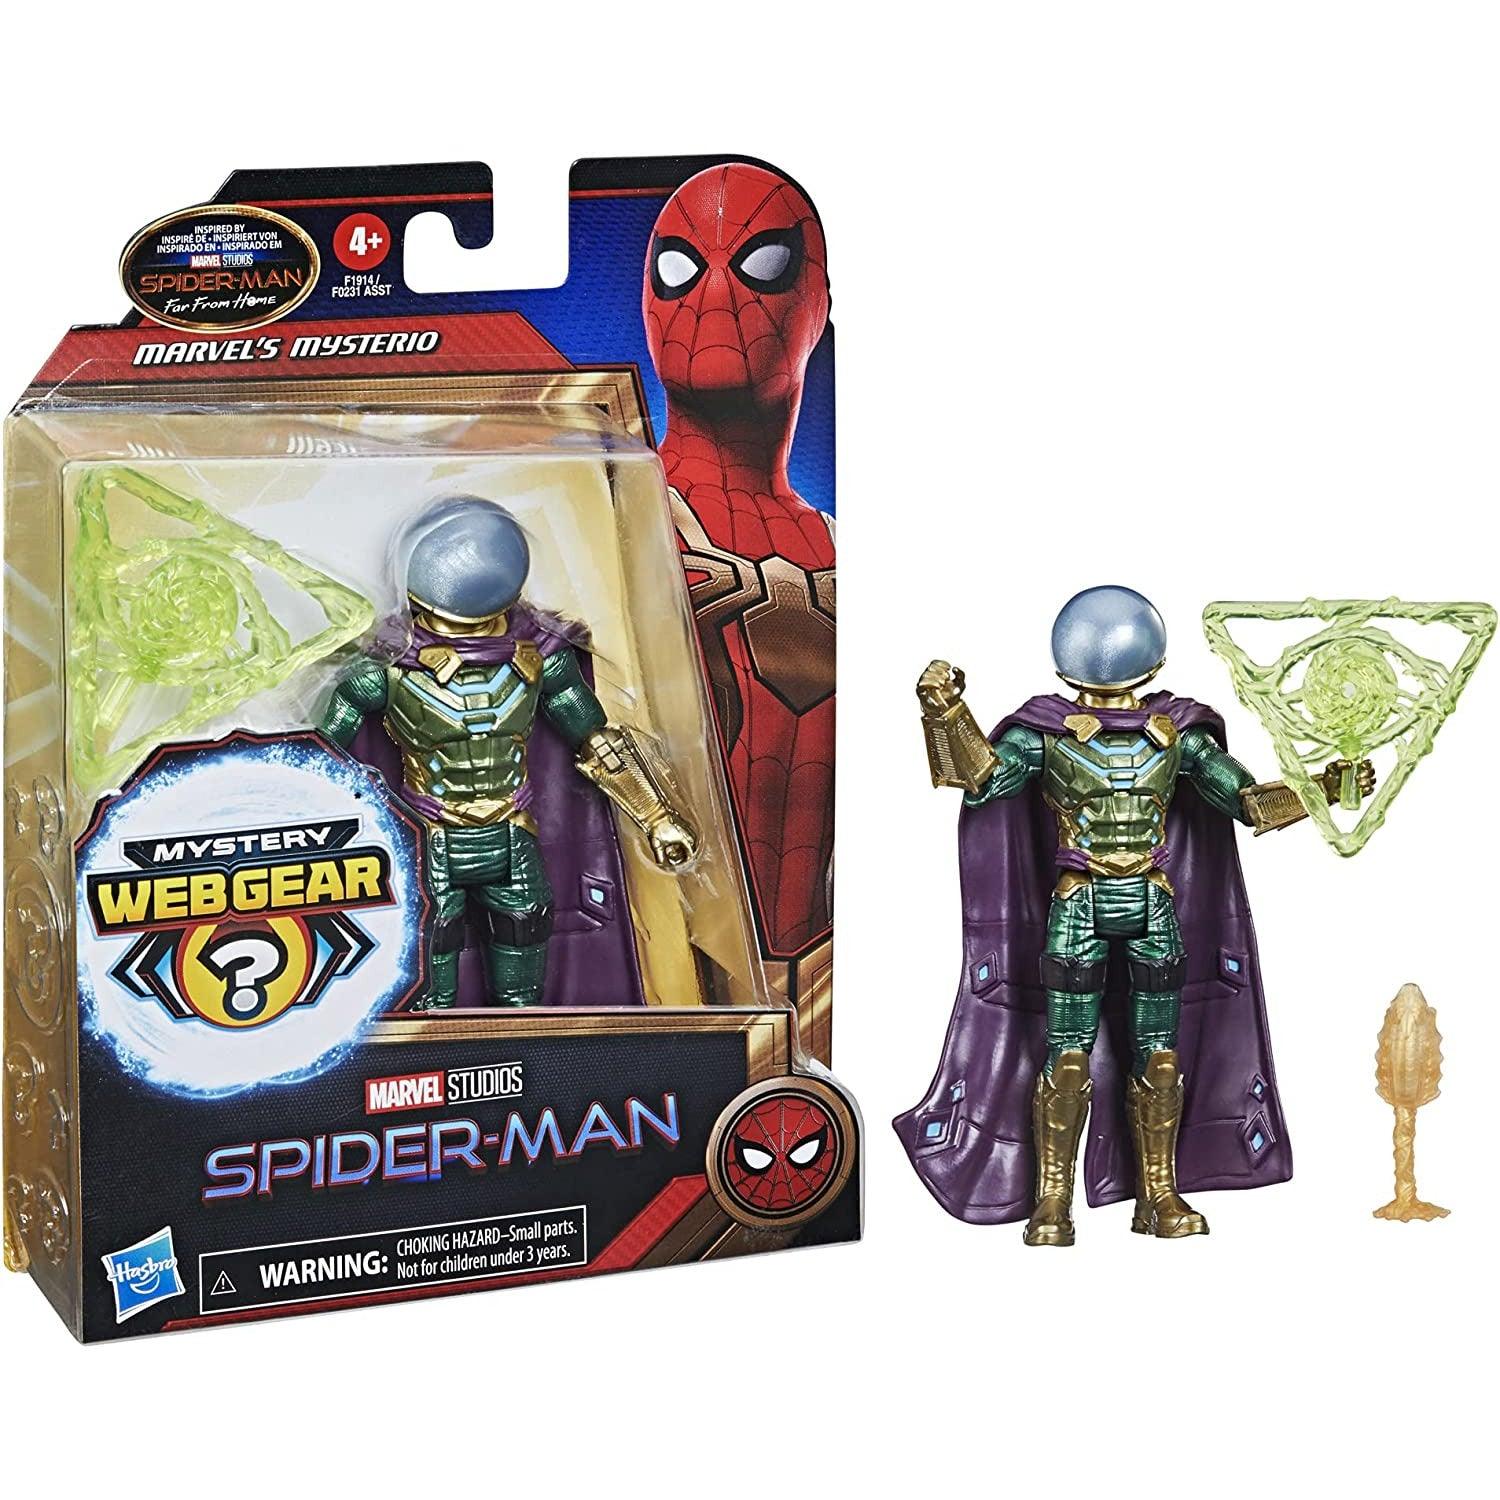 Hasbro Marvel Studios Spider-Man Mystery Web Gear Marvel's Mysterio Action Figure - 6-Inch - BumbleToys - 5-7 Years, Action Figures, Avengers, Boys, Eagle Plus